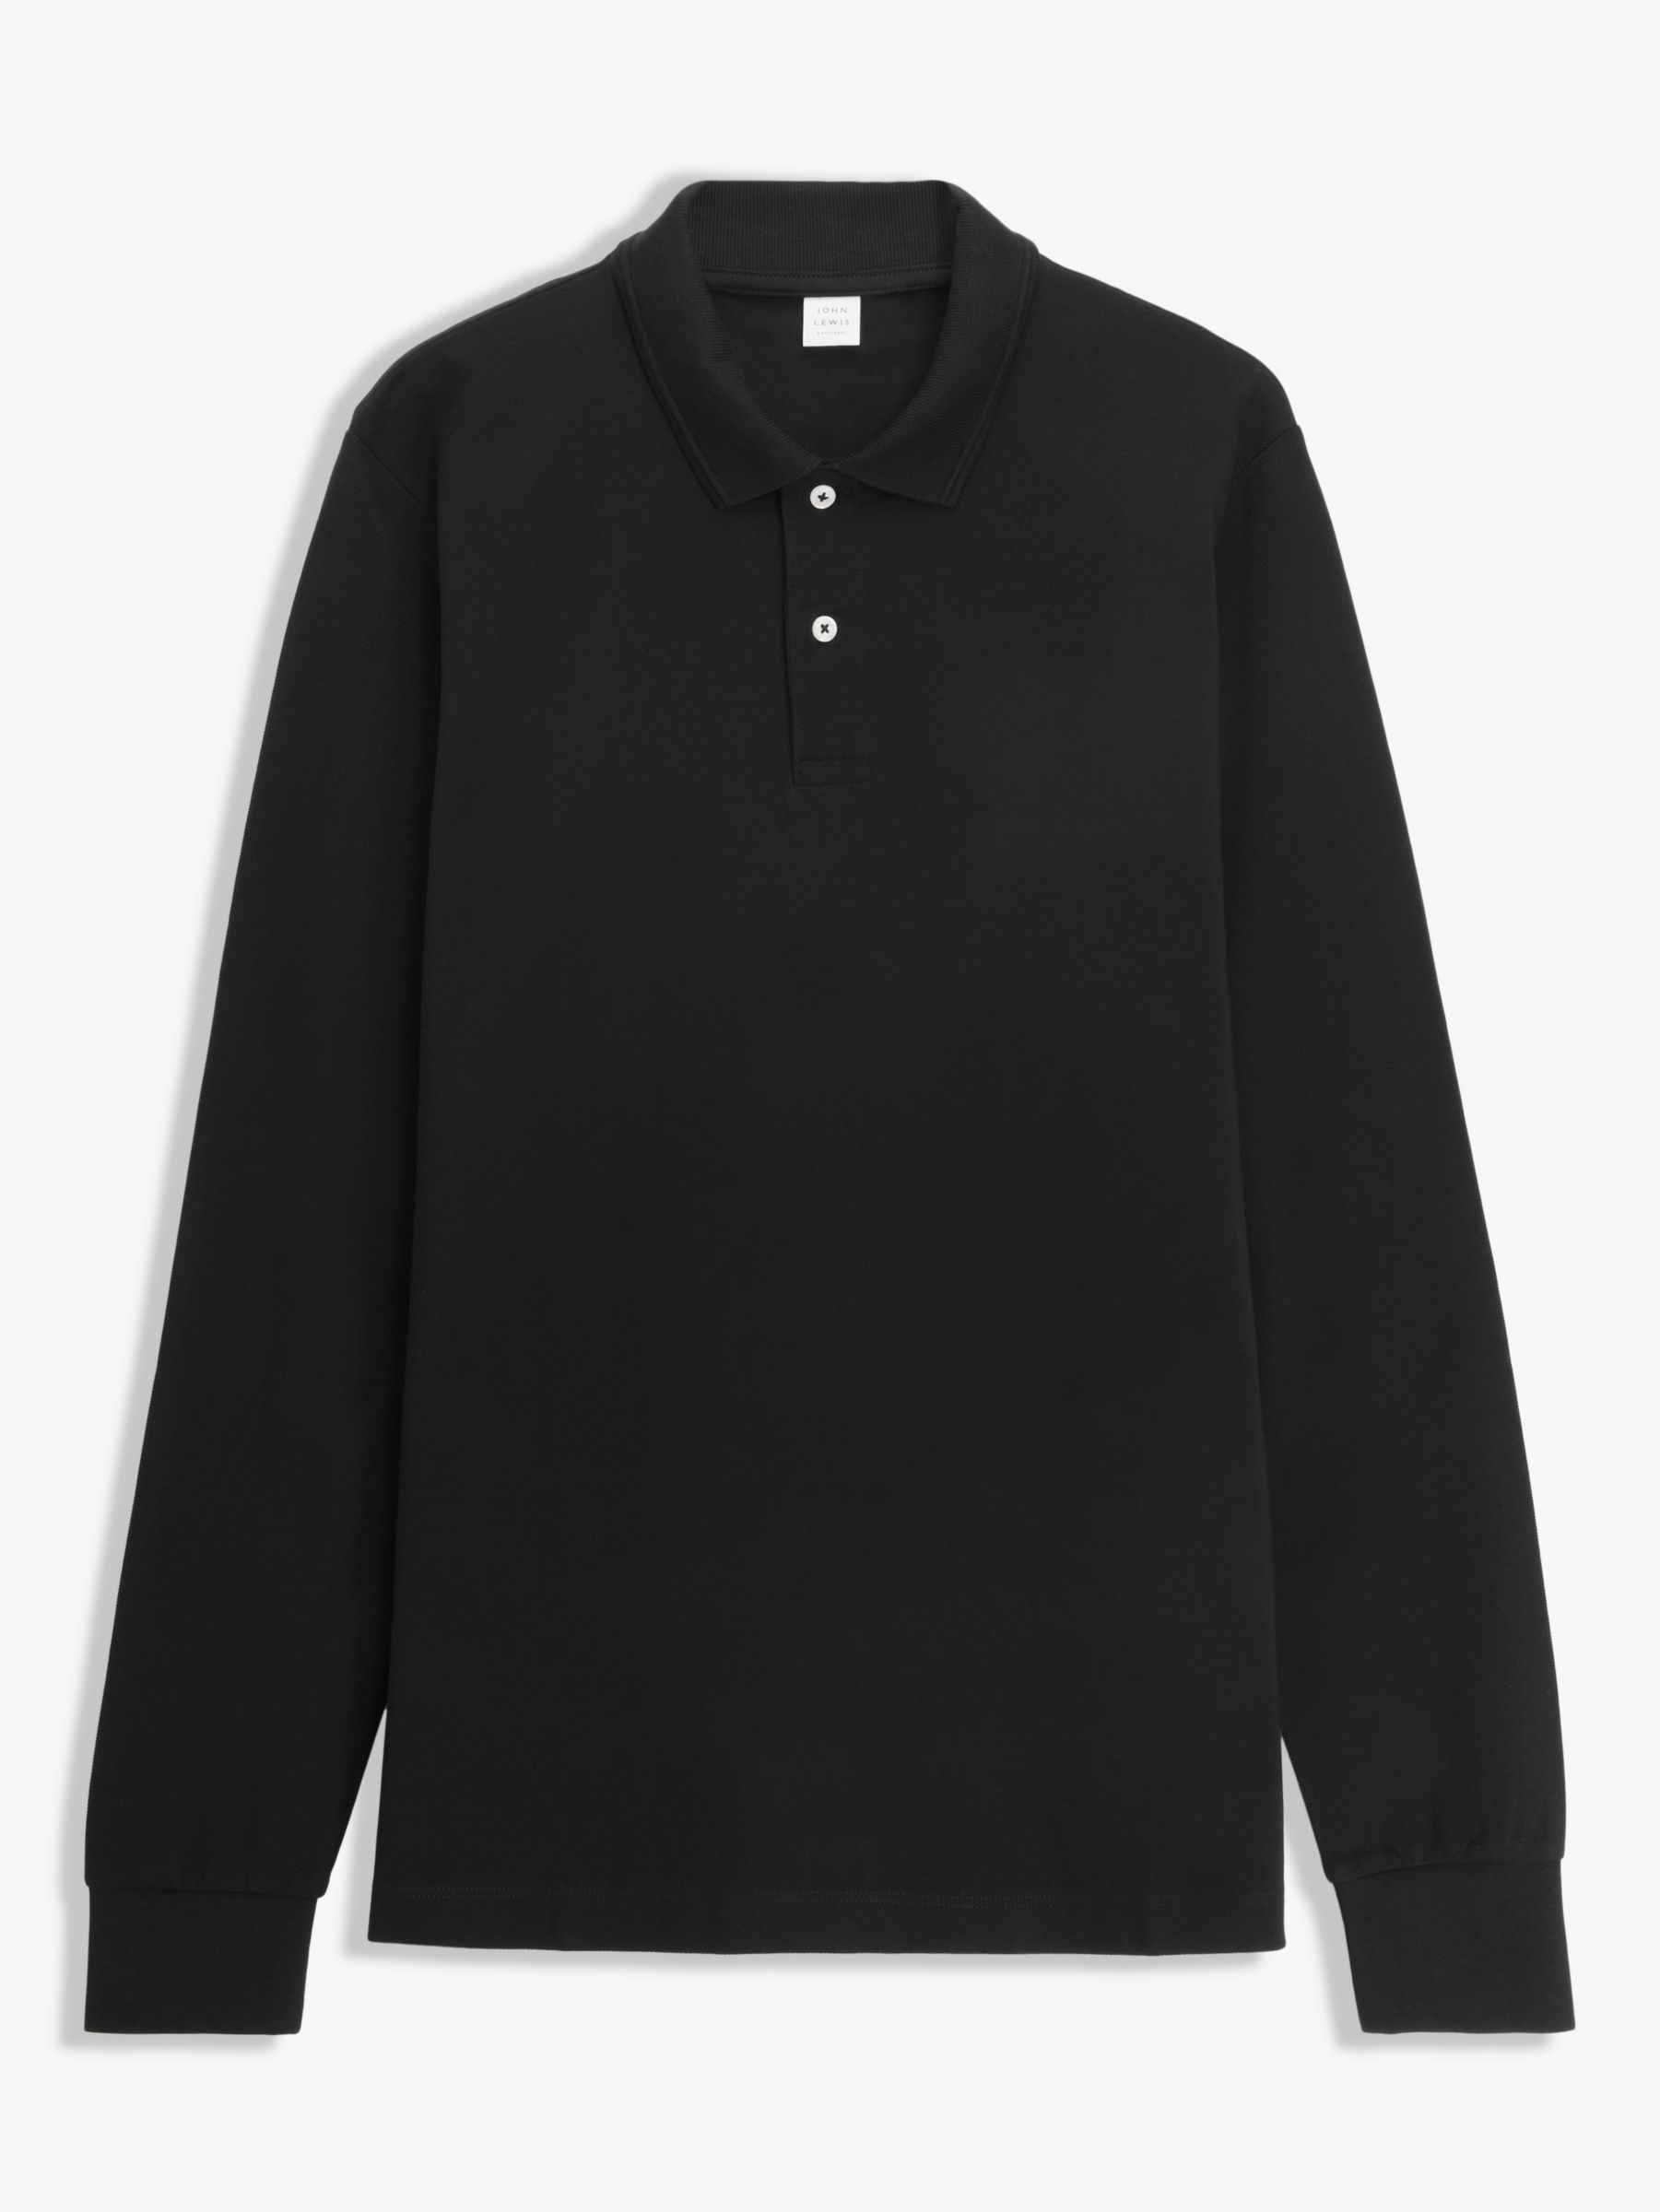 John Lewis Supima Cotton Long Sleeve Jersey Polo Shirt, Black, M